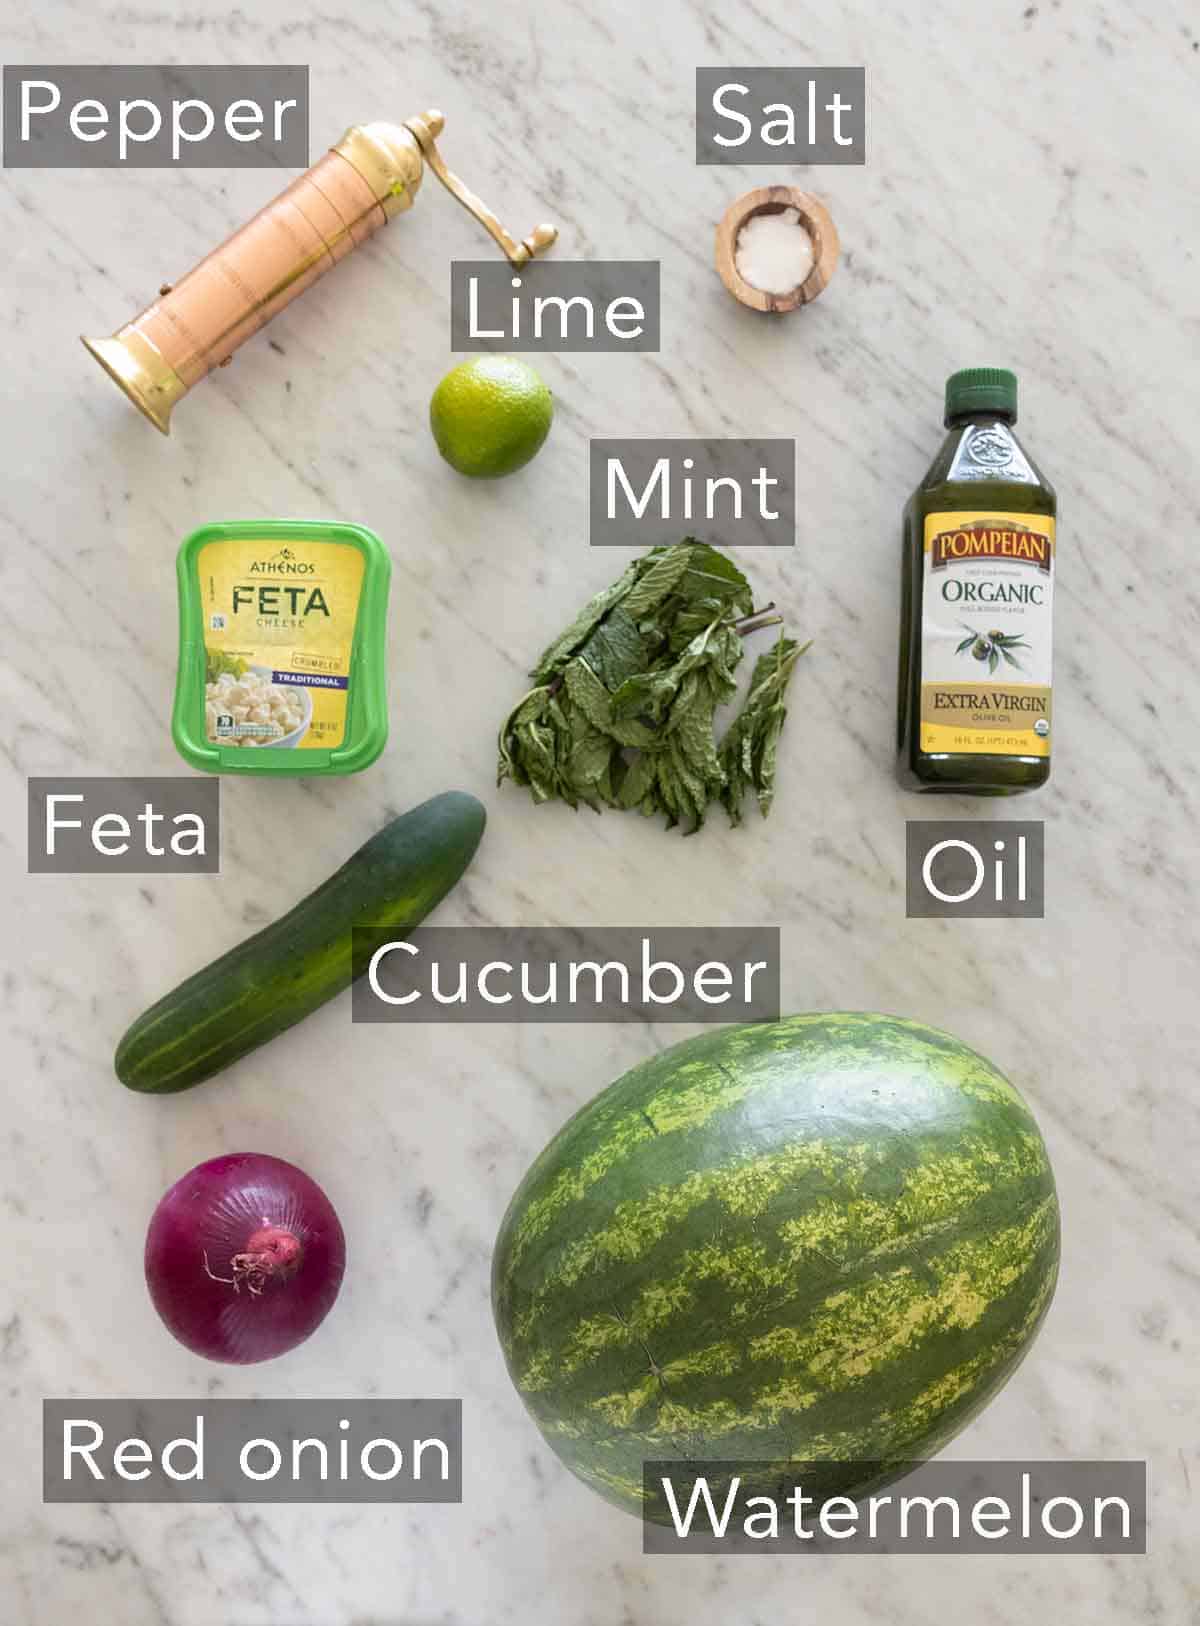 Ingredients needed to make watermelon salad.